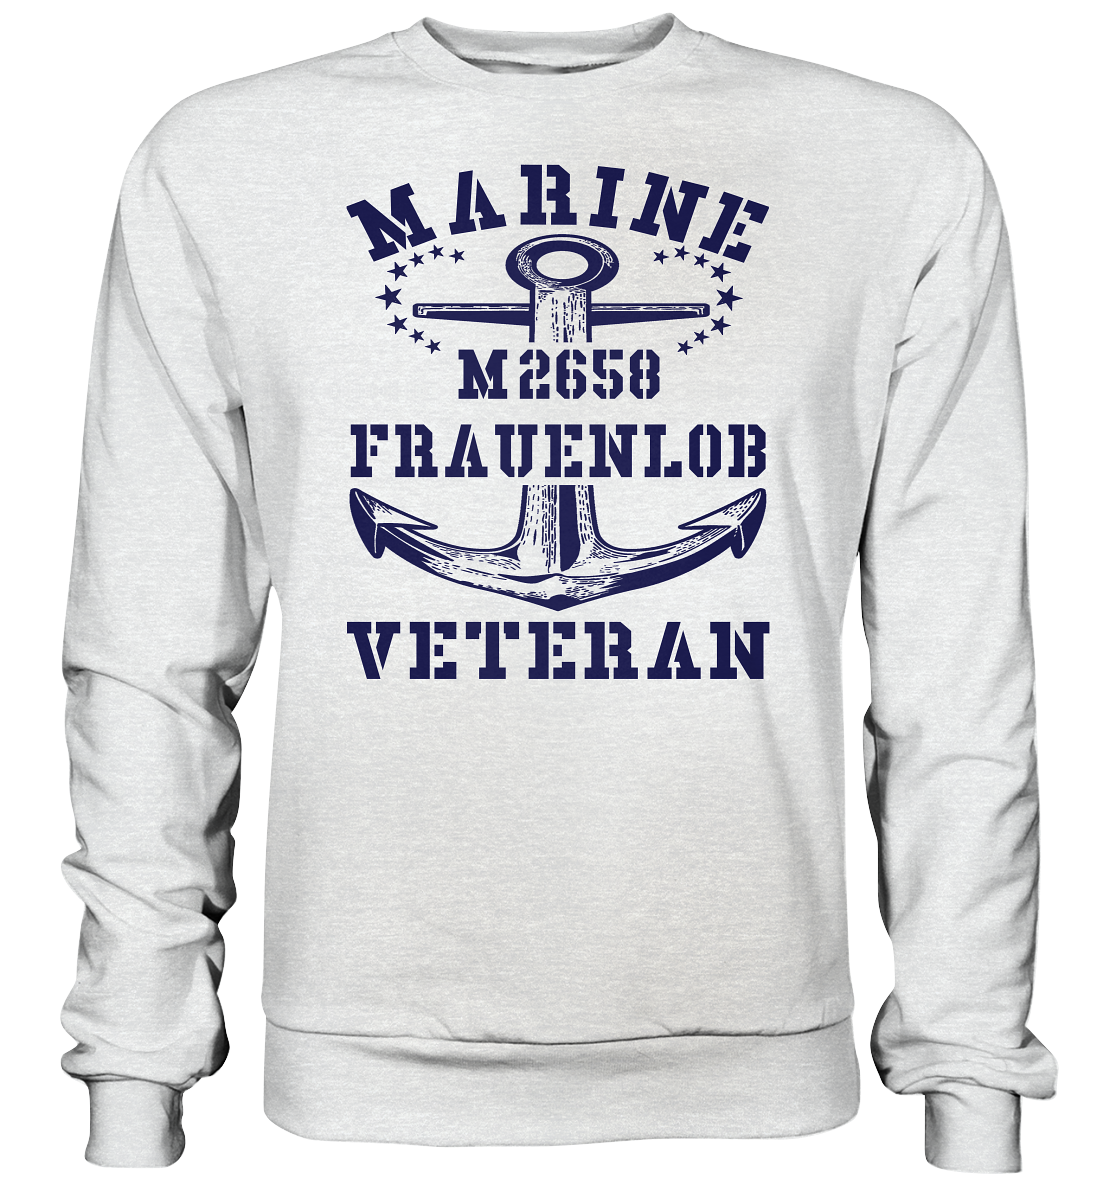 BiMi M2658 FRAUENLOB Marine Veteran - Premium Sweatshirt